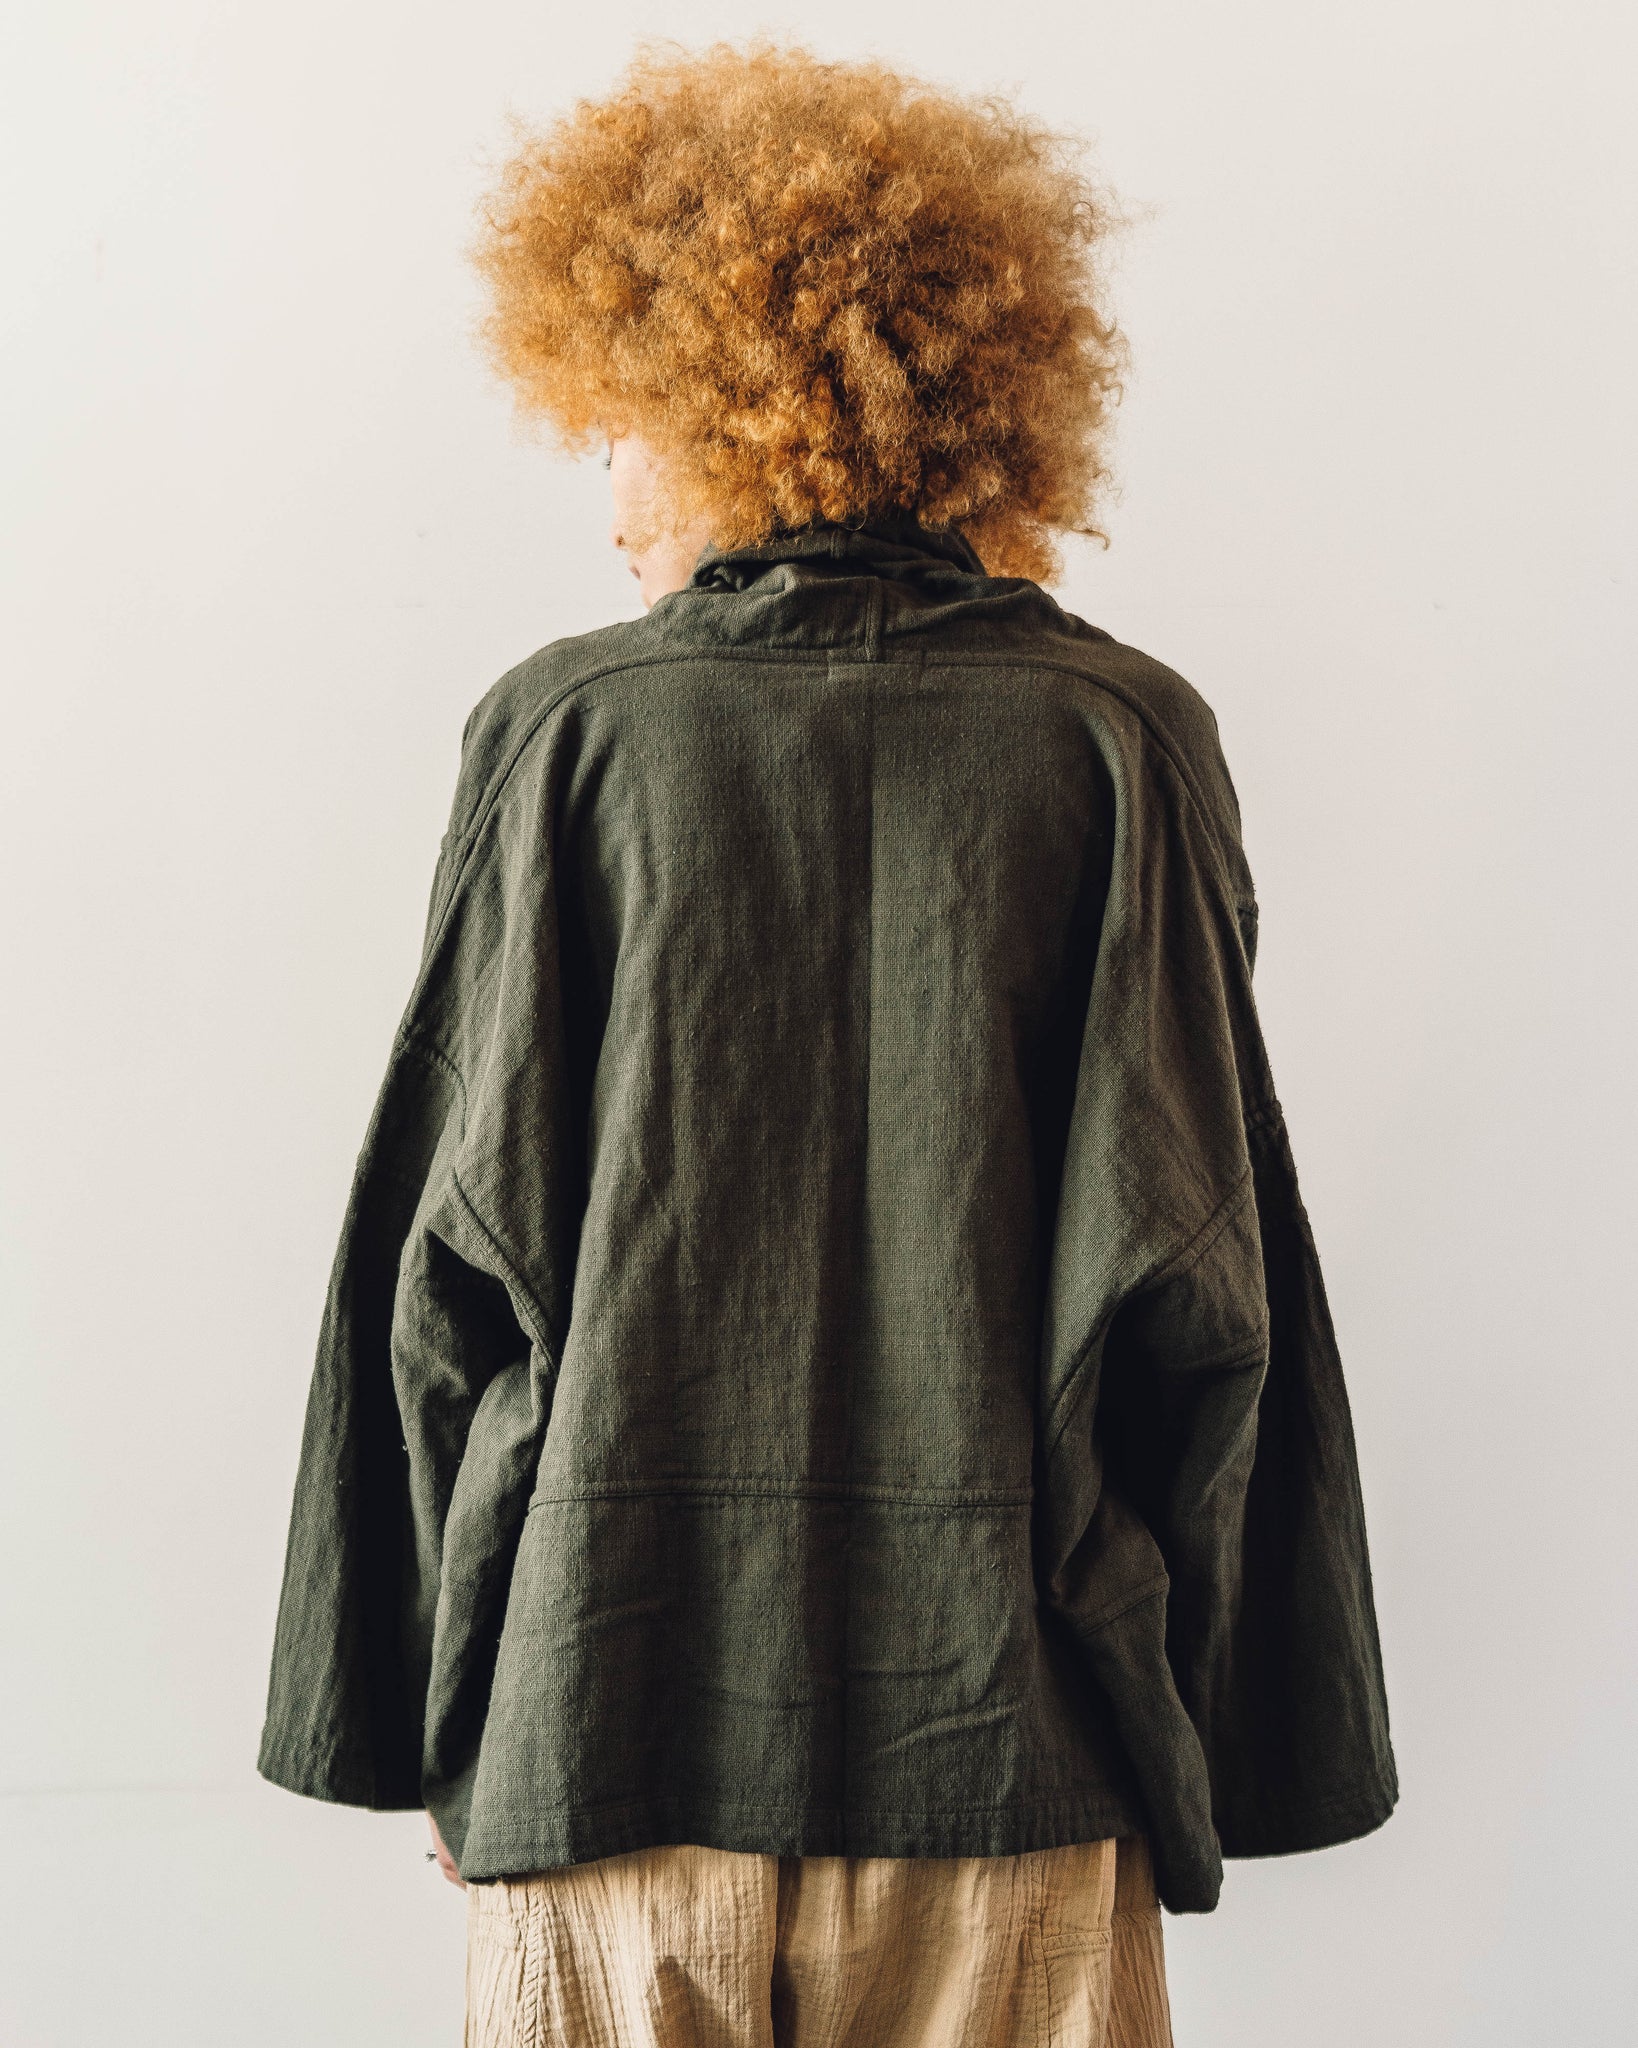 Atelier Delphine Kimono Jacket, Hunter Green